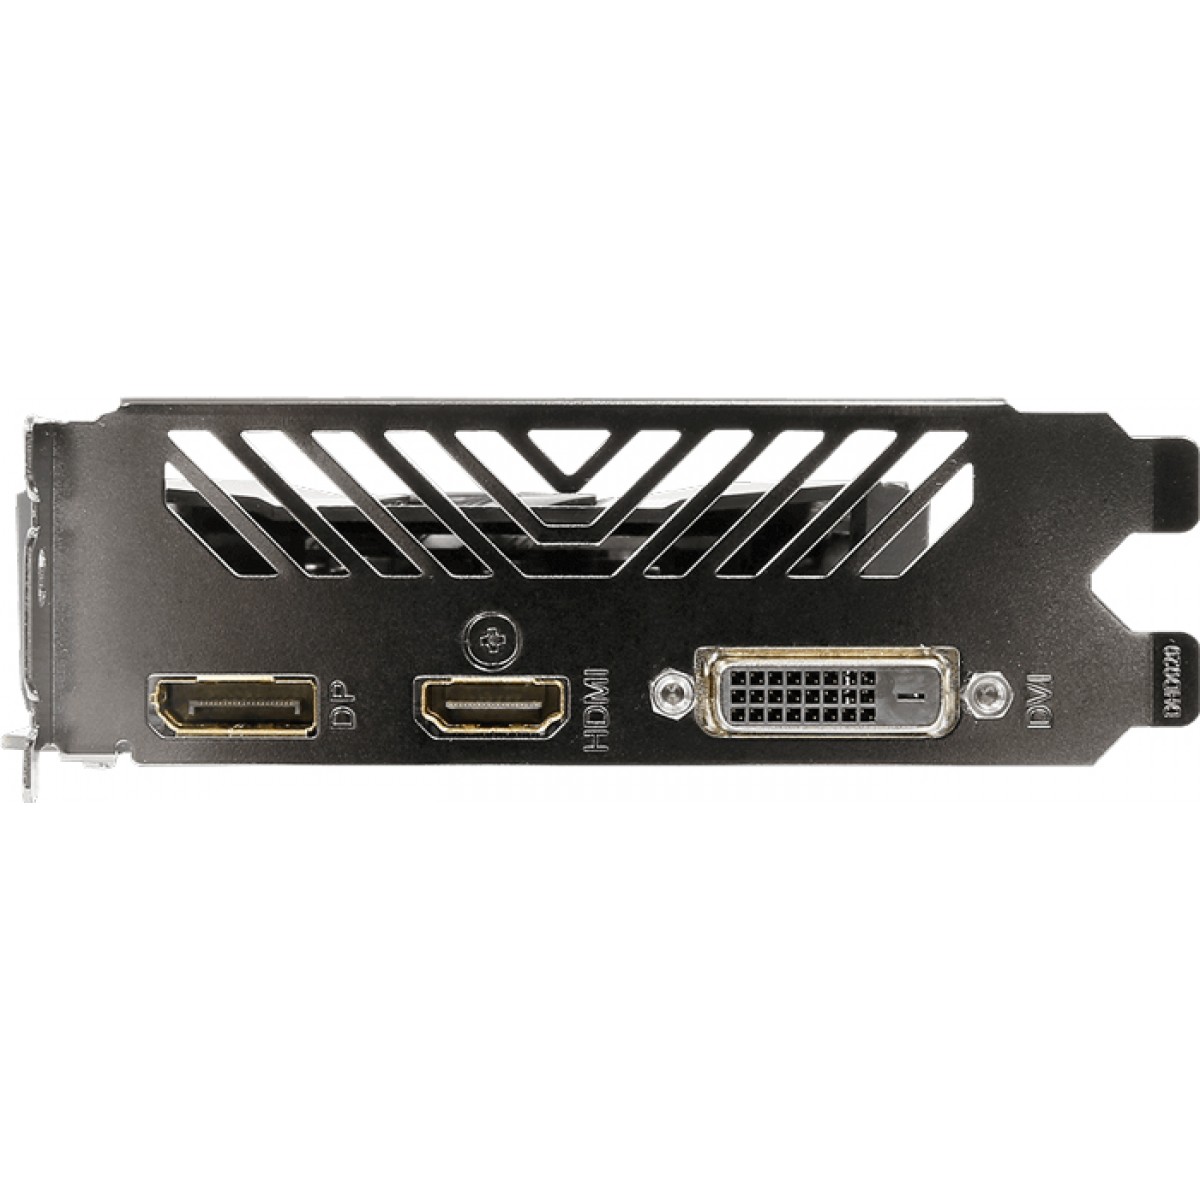 Placa de Vídeo Gigabyte GeForce GTX 1050 D5, 3GB GDDR5, 96Bit, GV-N1050D5-3GD